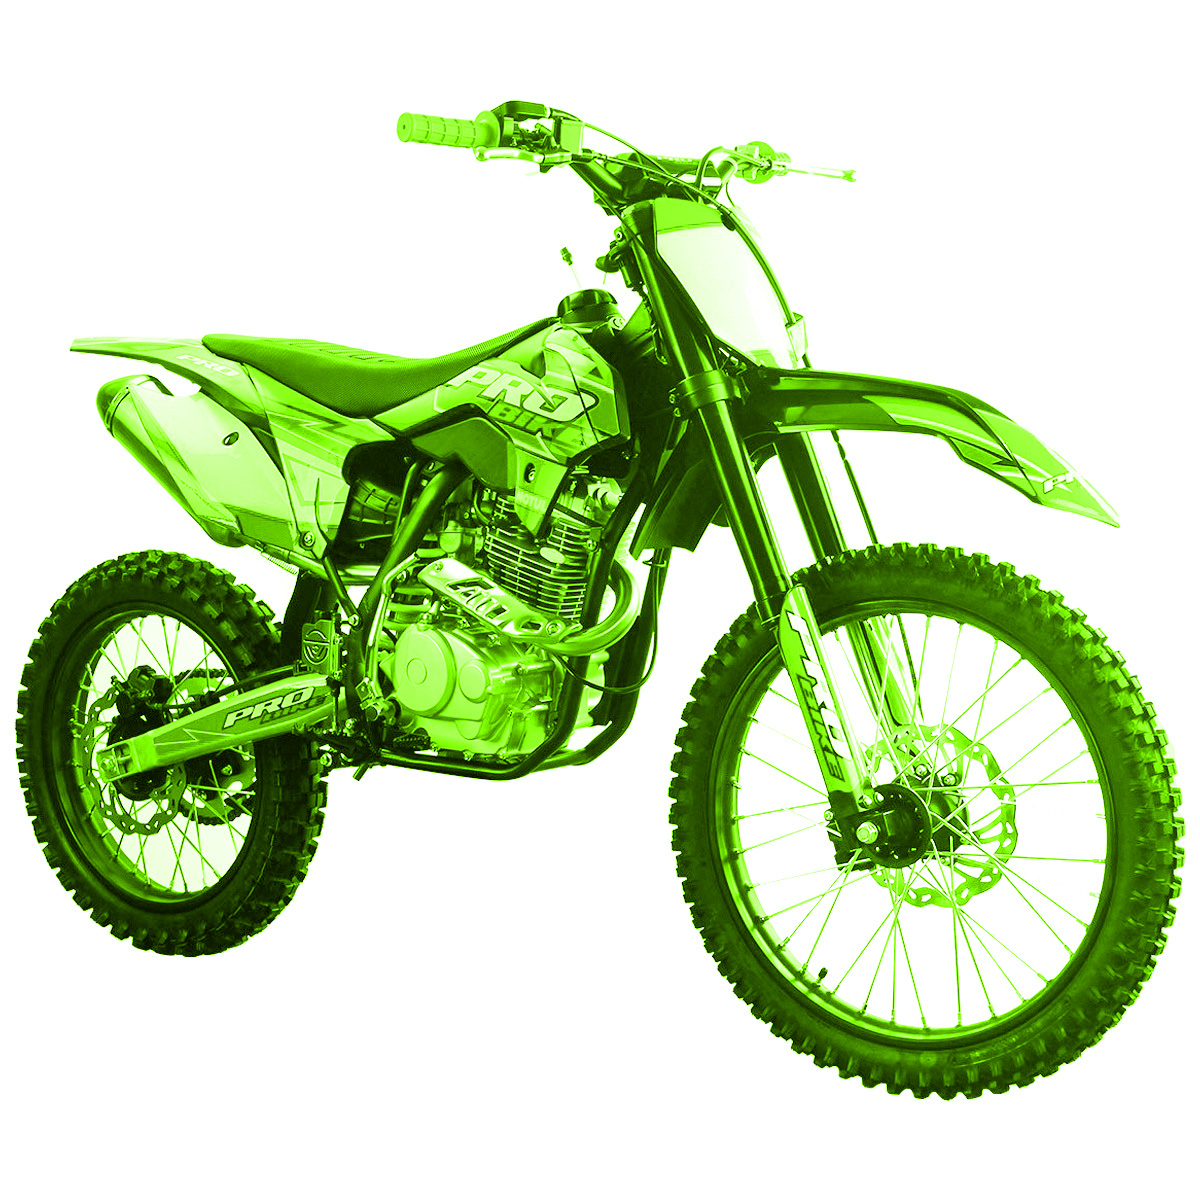 dirt bike moto-cross 250cm3, couleur verte, PROBIKE